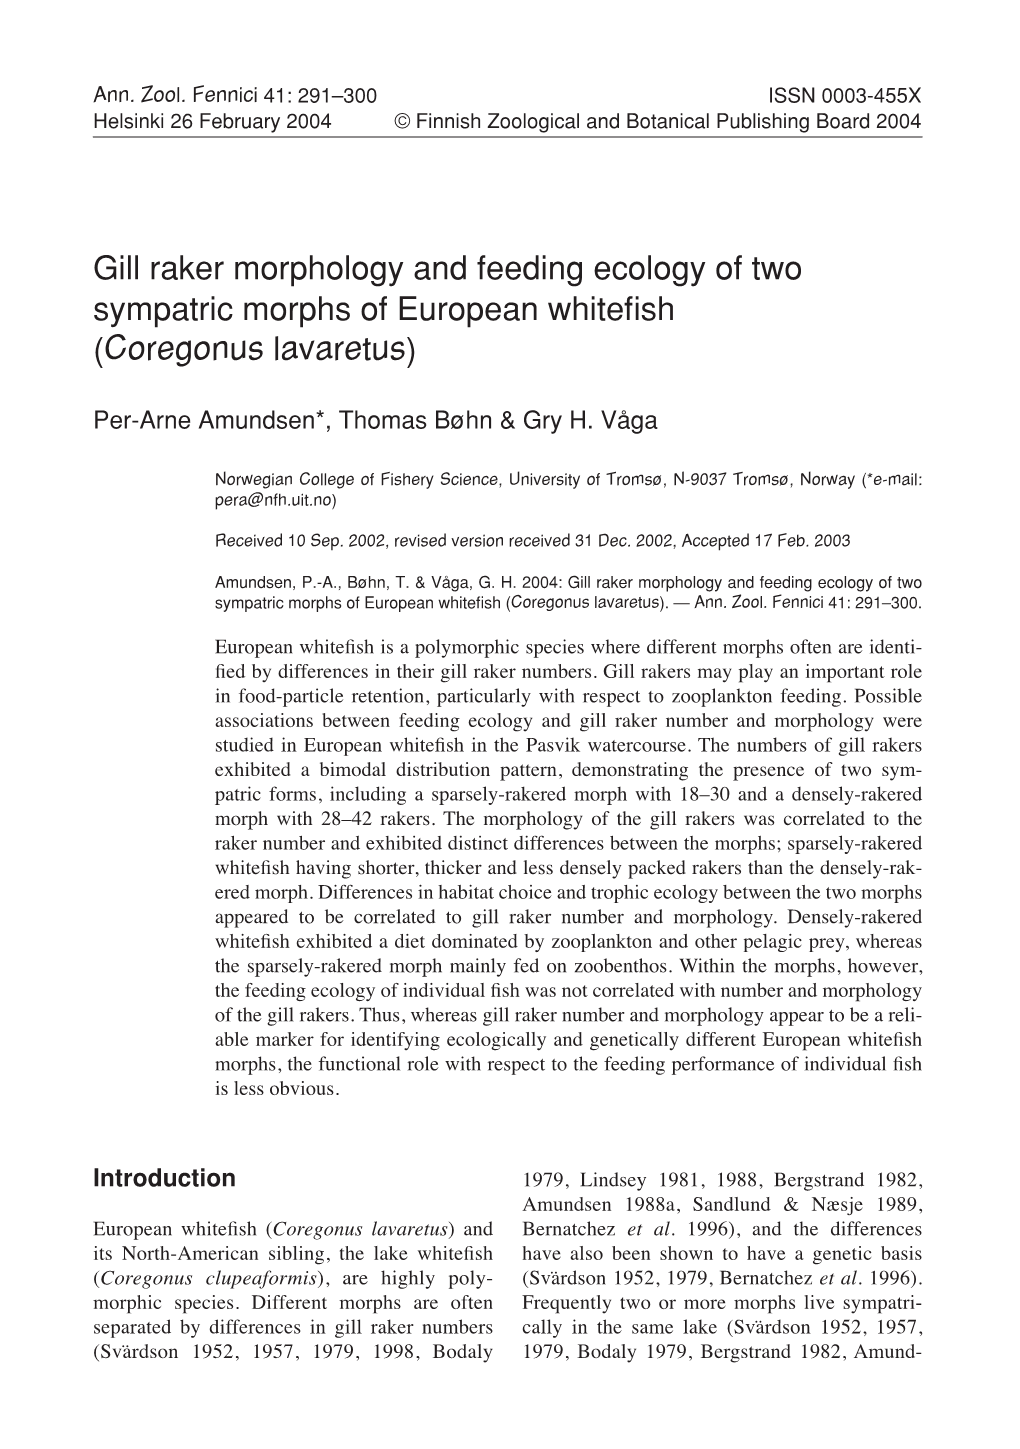 Gill Raker Morphology and Feeding Ecology of Two Sympatric Morphs of European Whiteﬁ Sh (Coregonus Lavaretus)